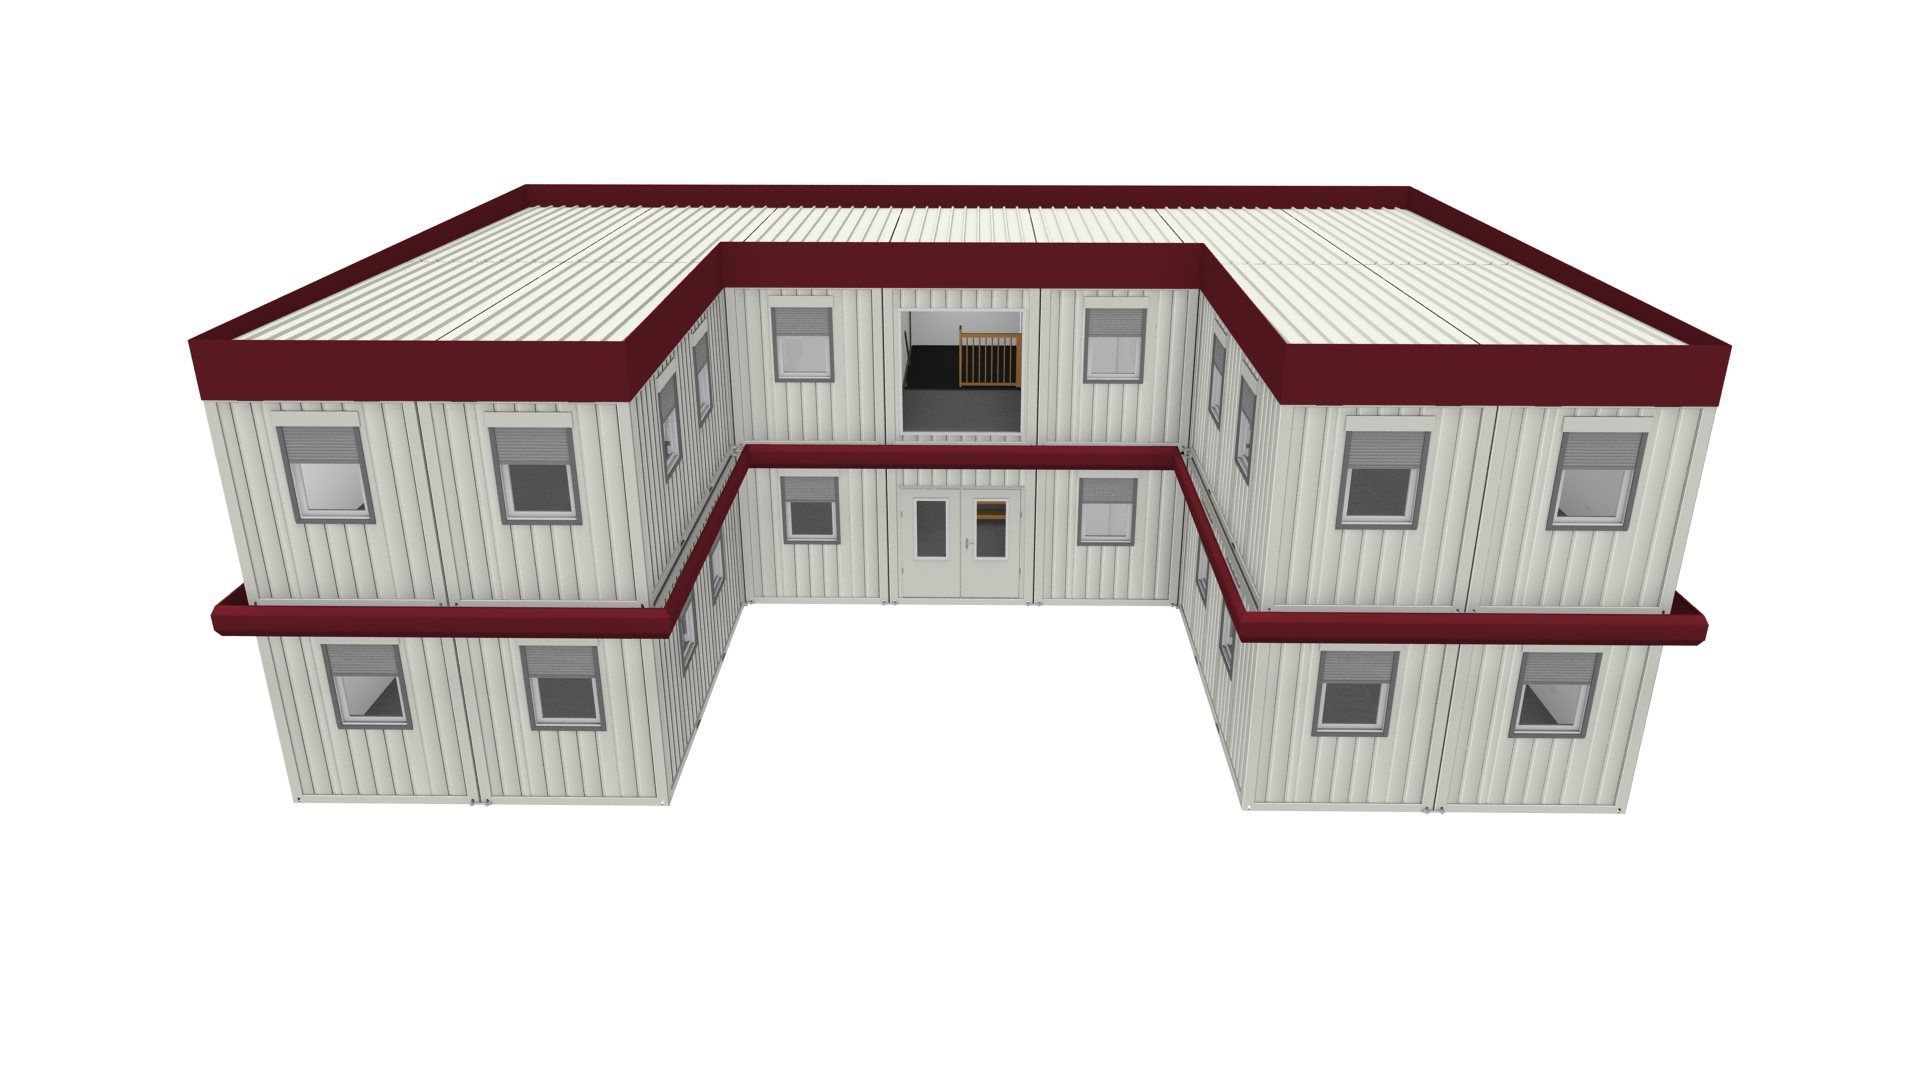 2-storey modular building with fascia